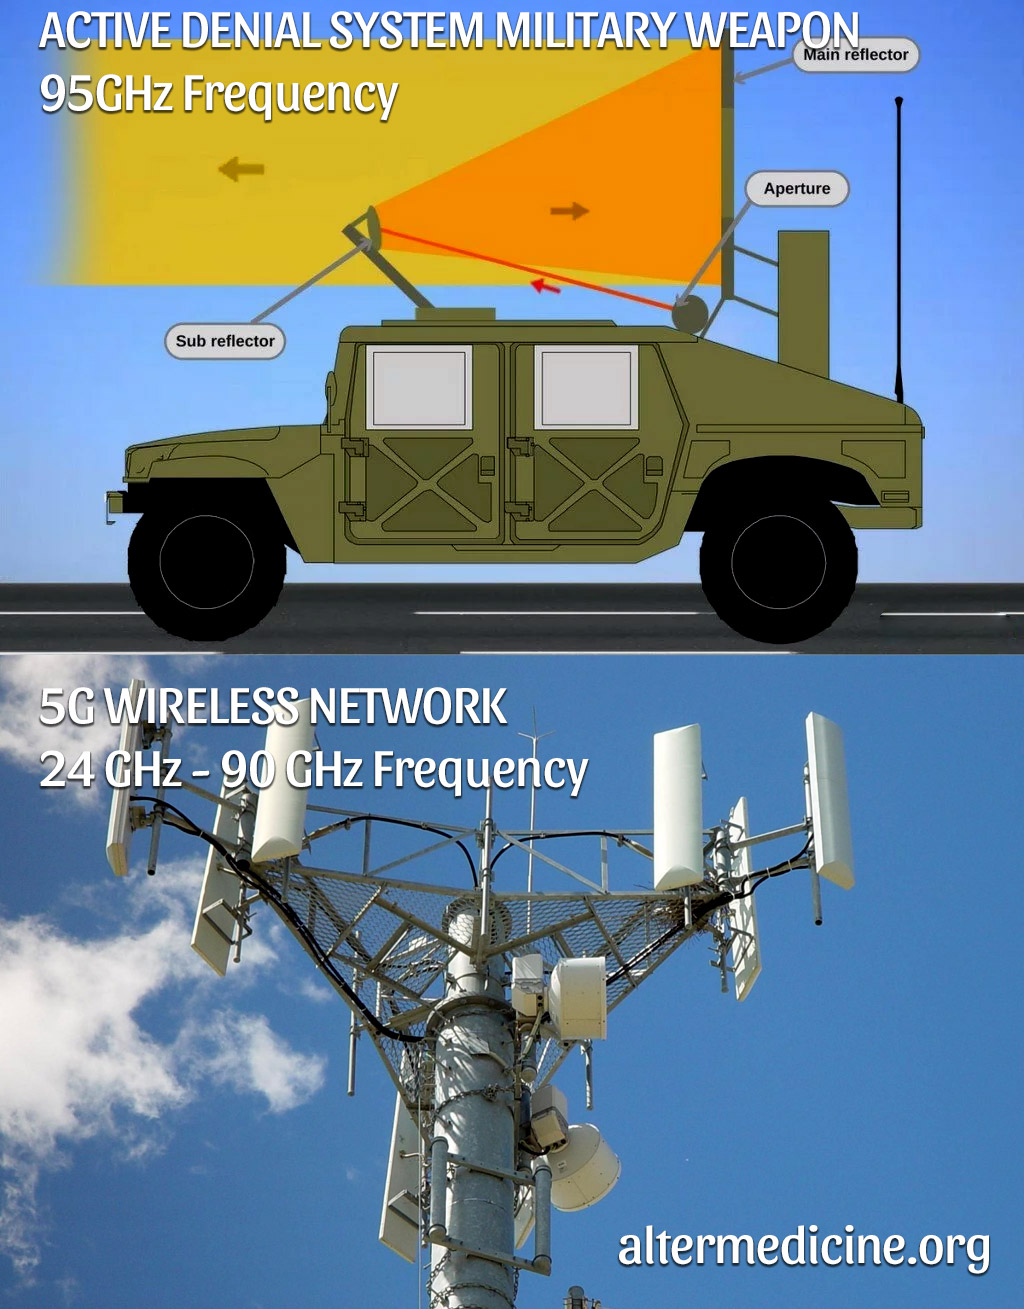 5G network vs Military denial system